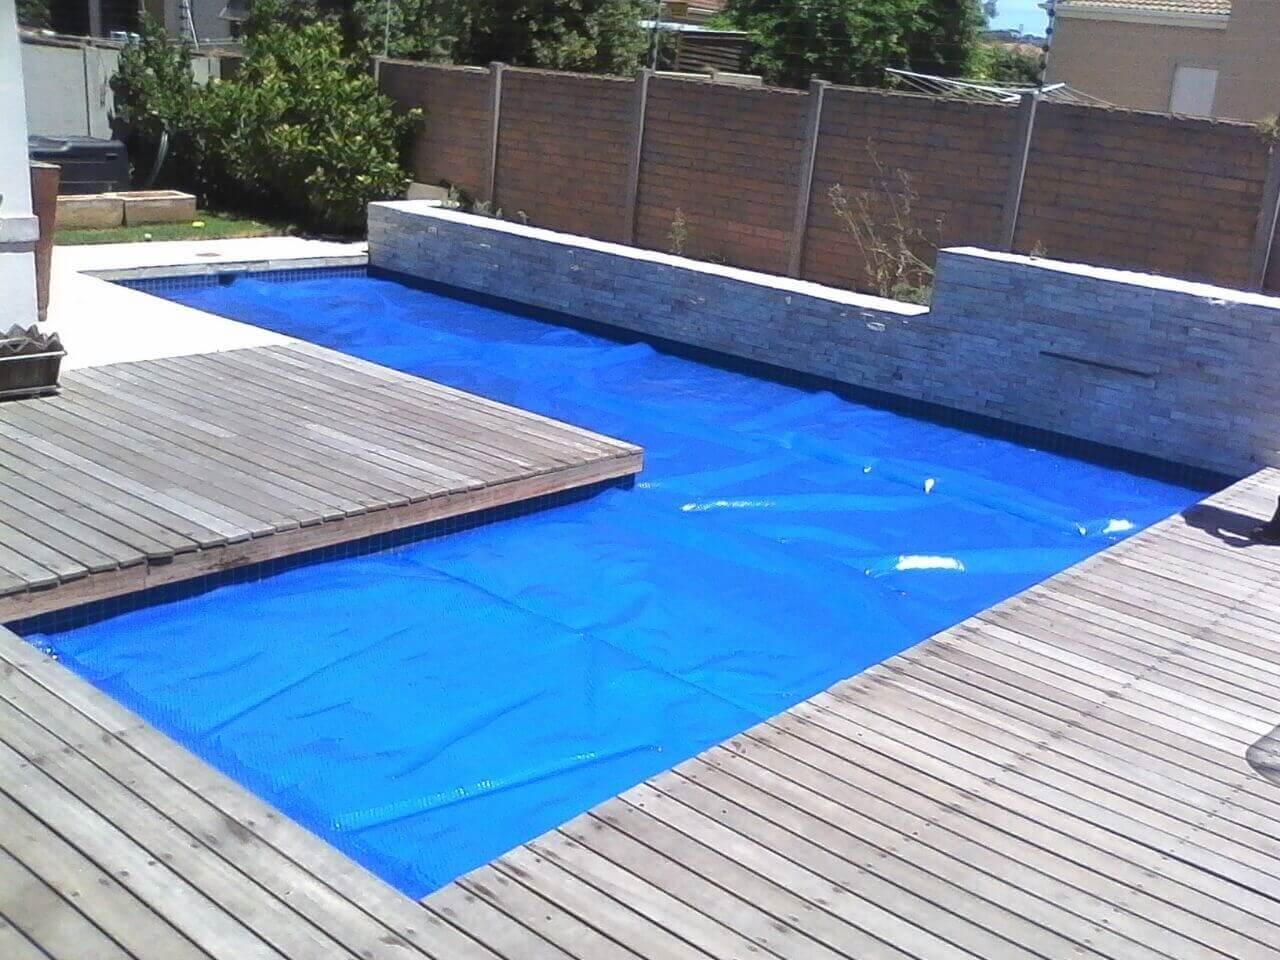 heated pool covers